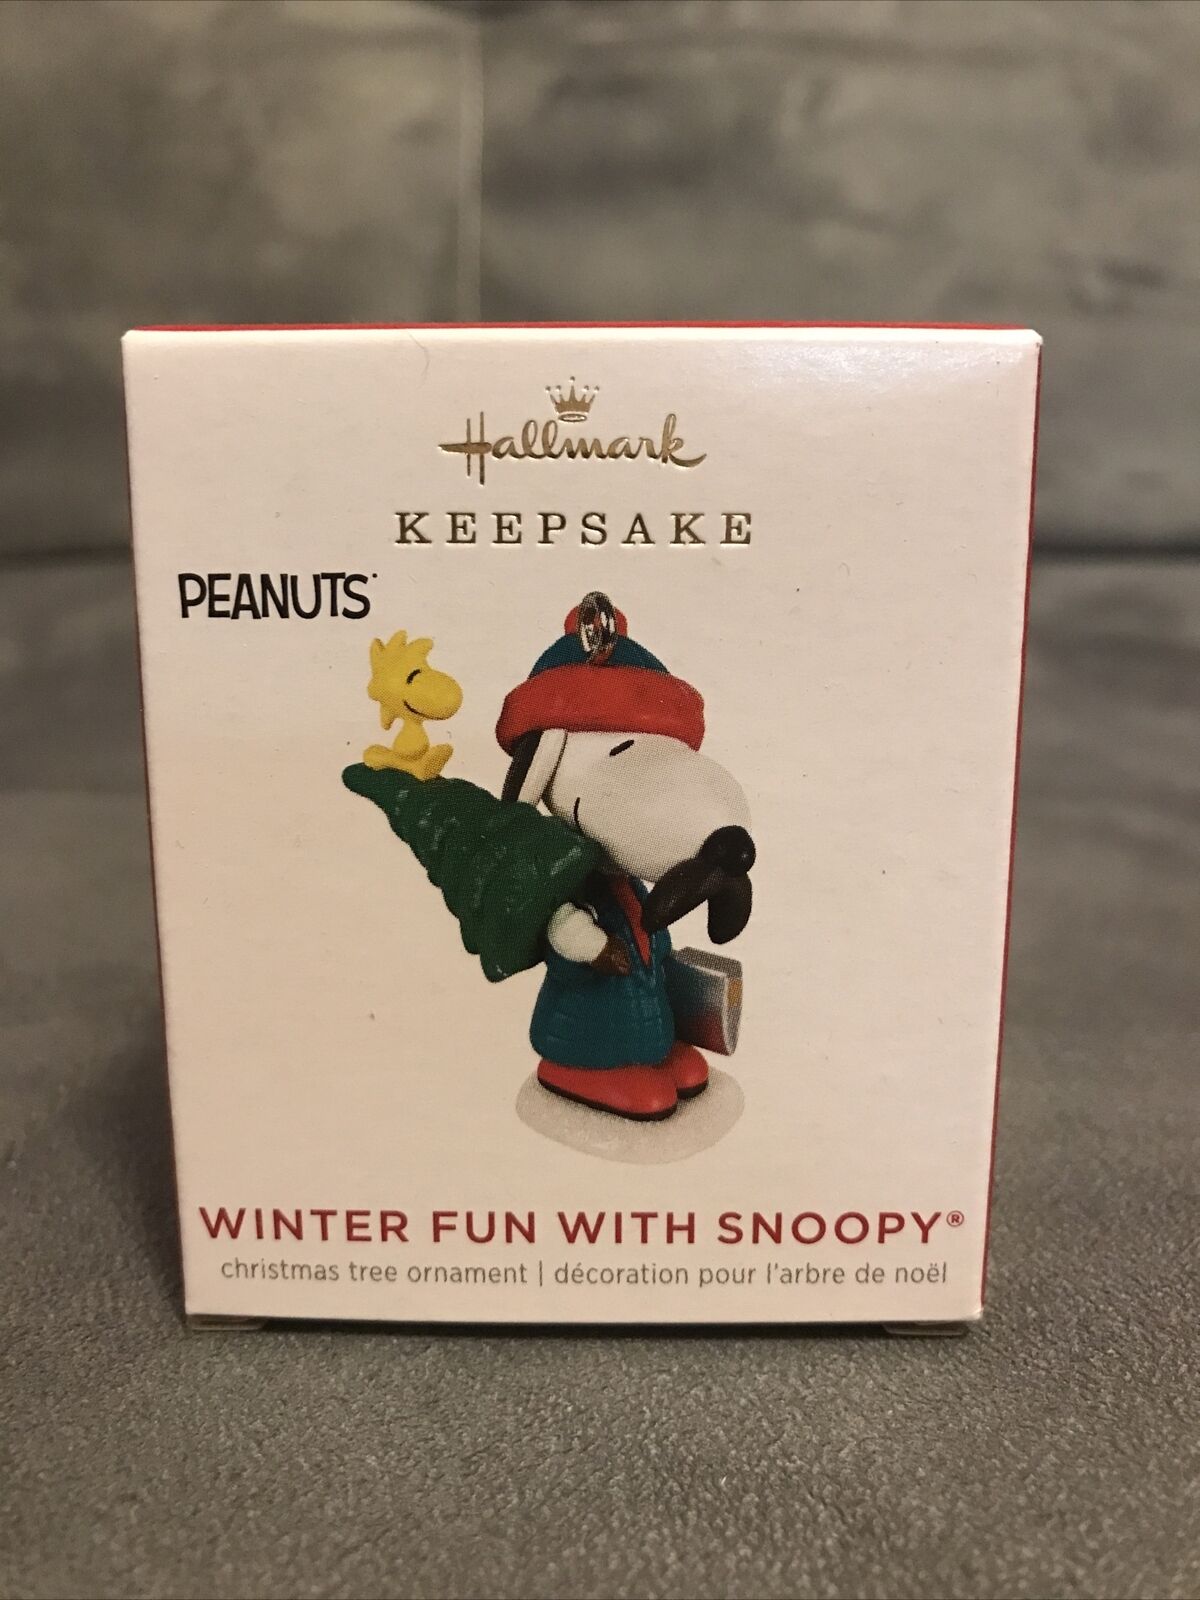 2021 Hallmark Ornament  Winter Fun with Snoopy  24th in series Peanuts miniature